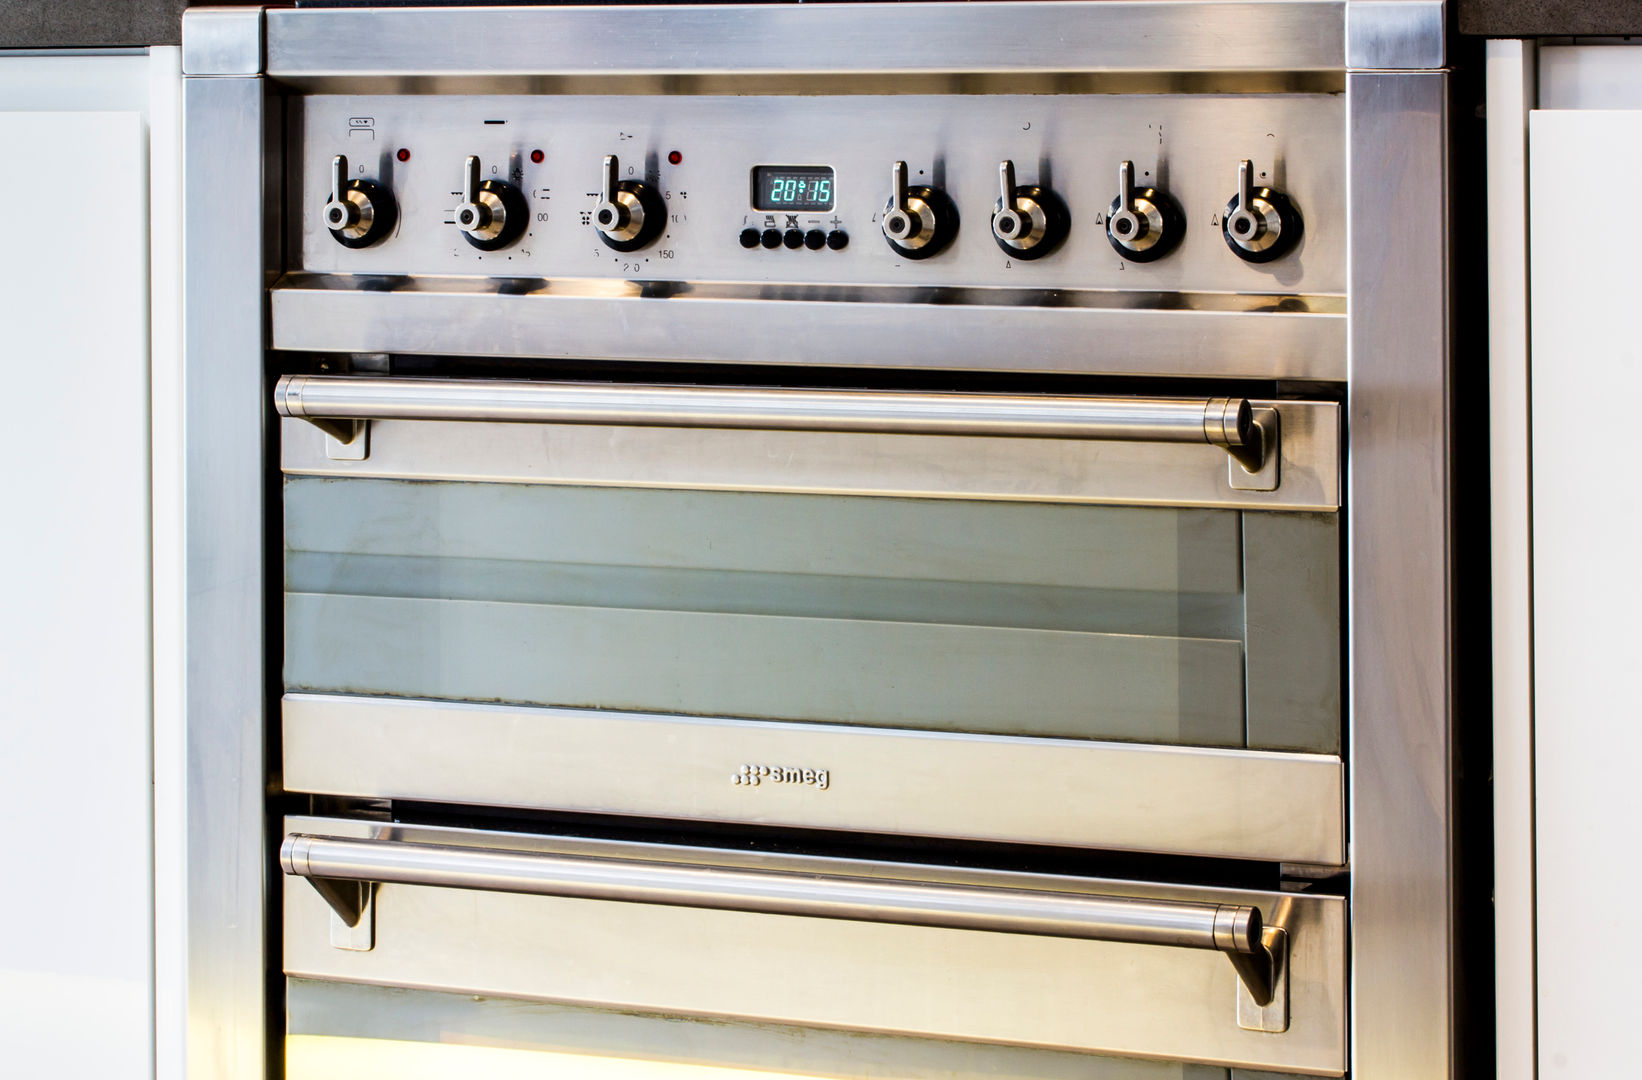 Modern cooker and oven Affleck Property Services ห้องครัว สิ่งทอและของใช้จิปาถะในครัว